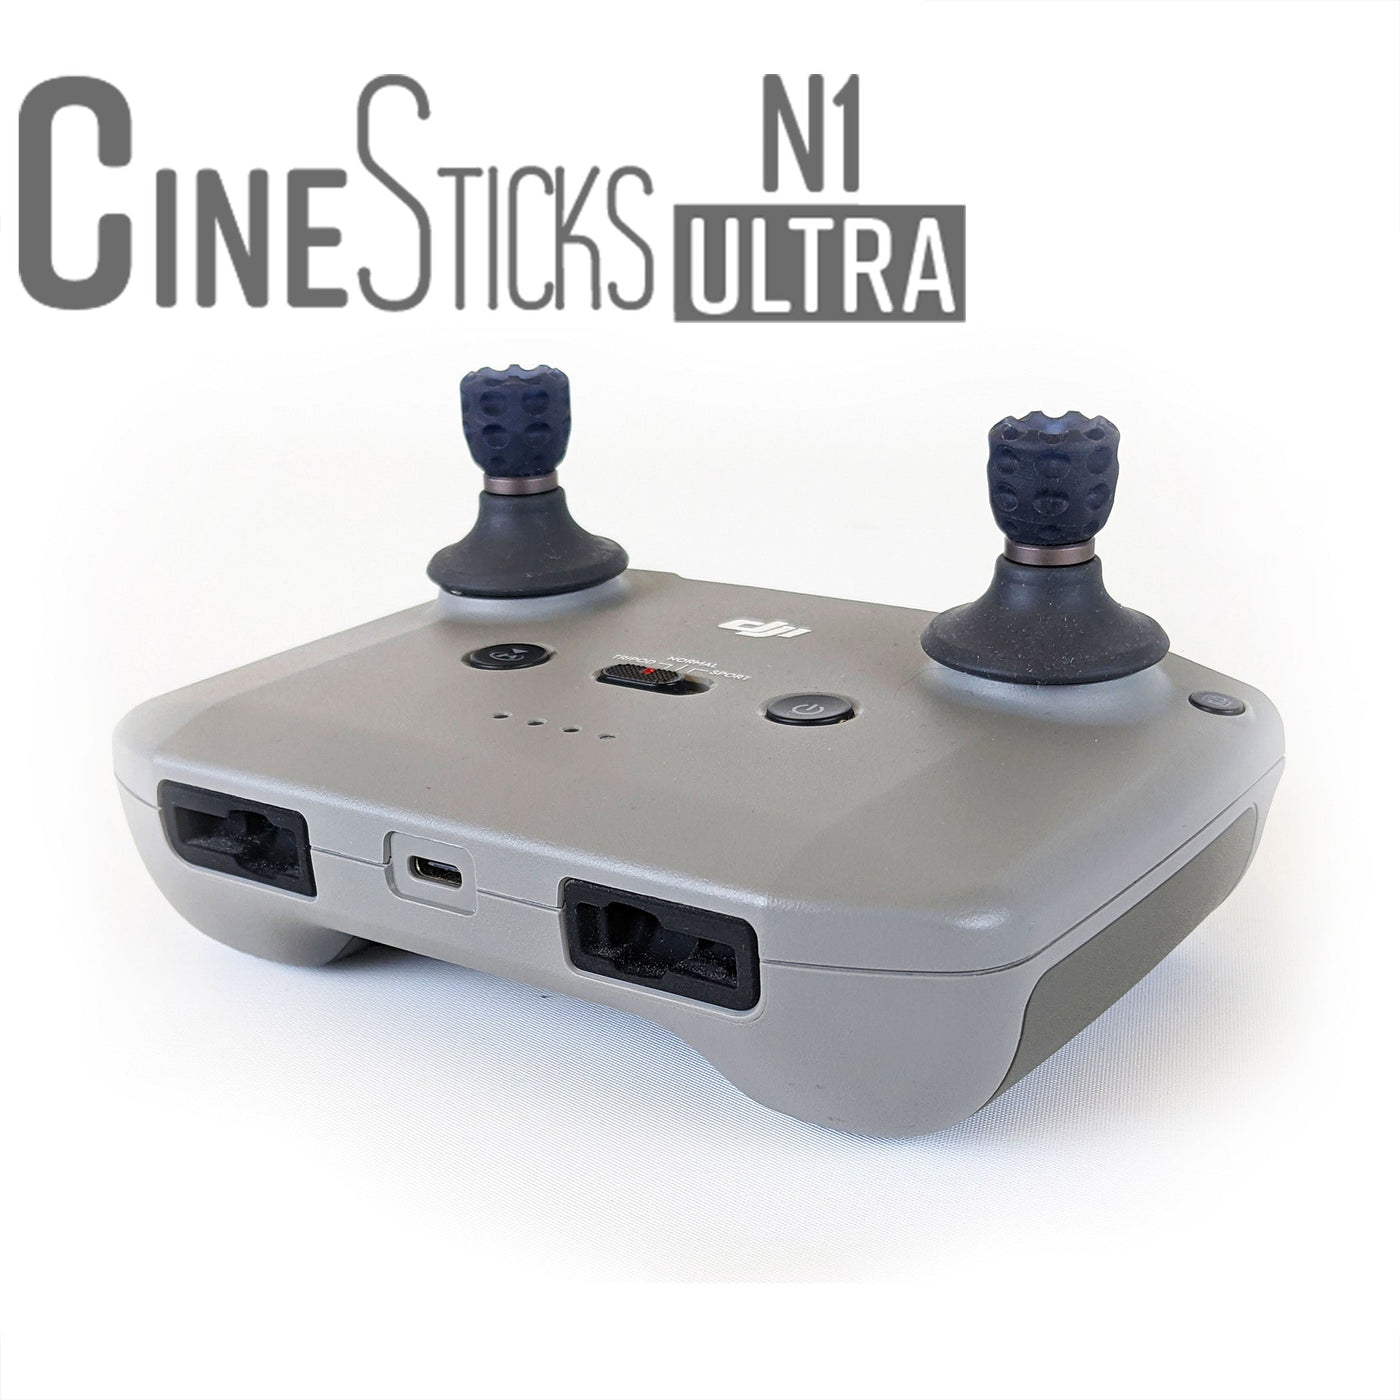 CineSticks N1 Ultra - US